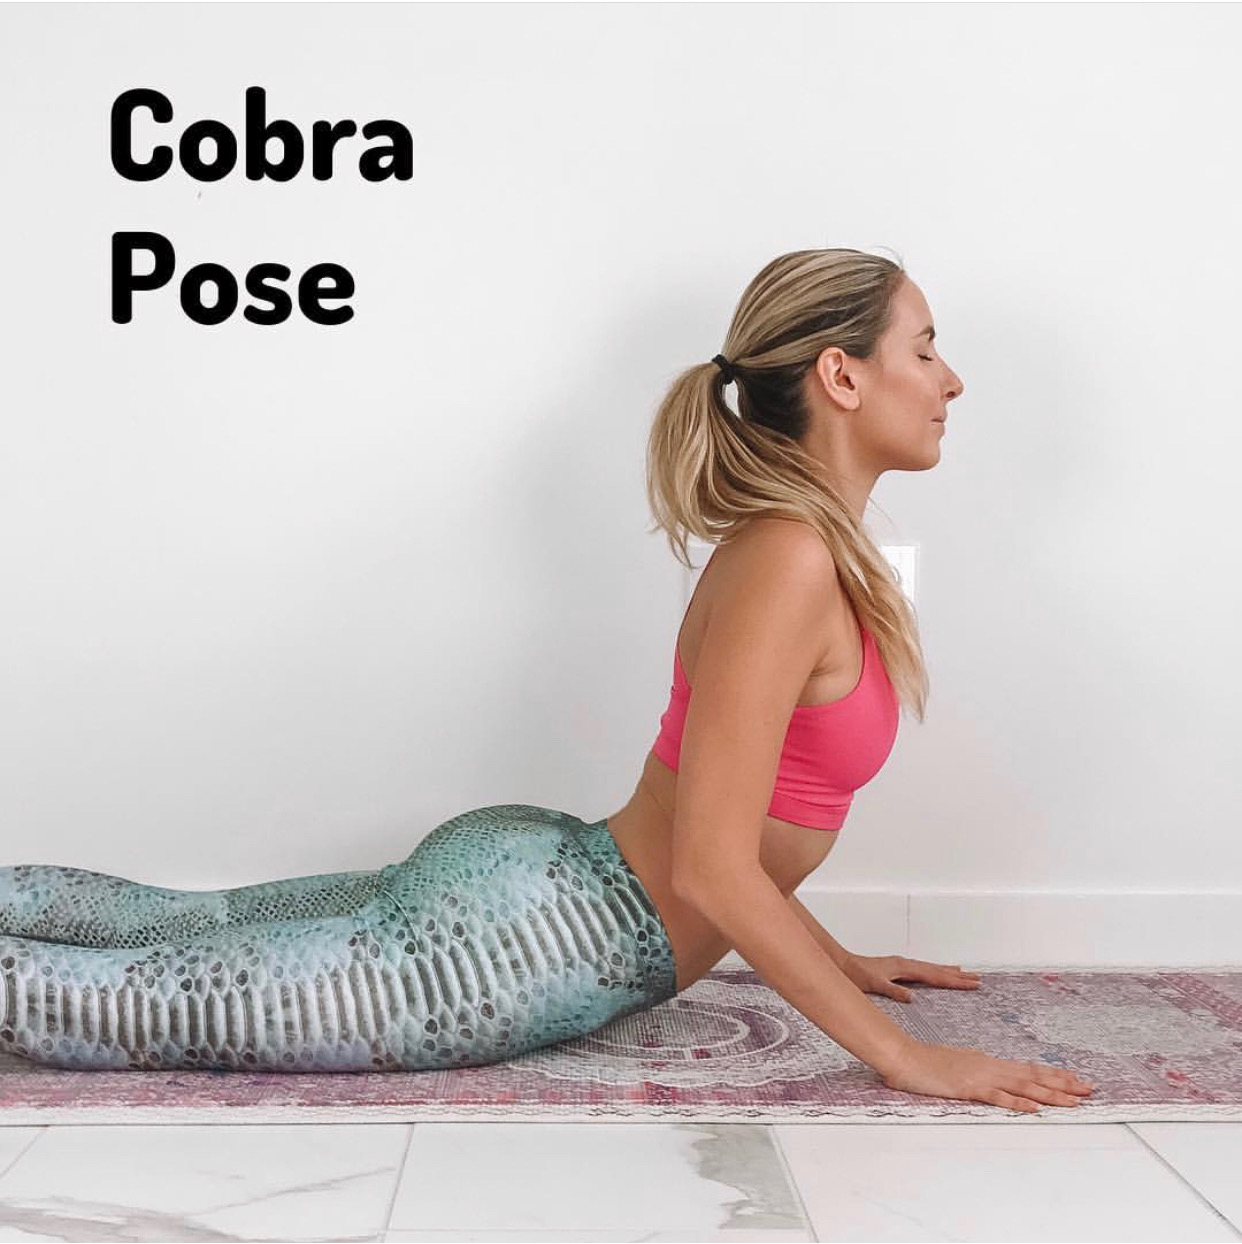 5. Cobra Pose x 5 deep breaths